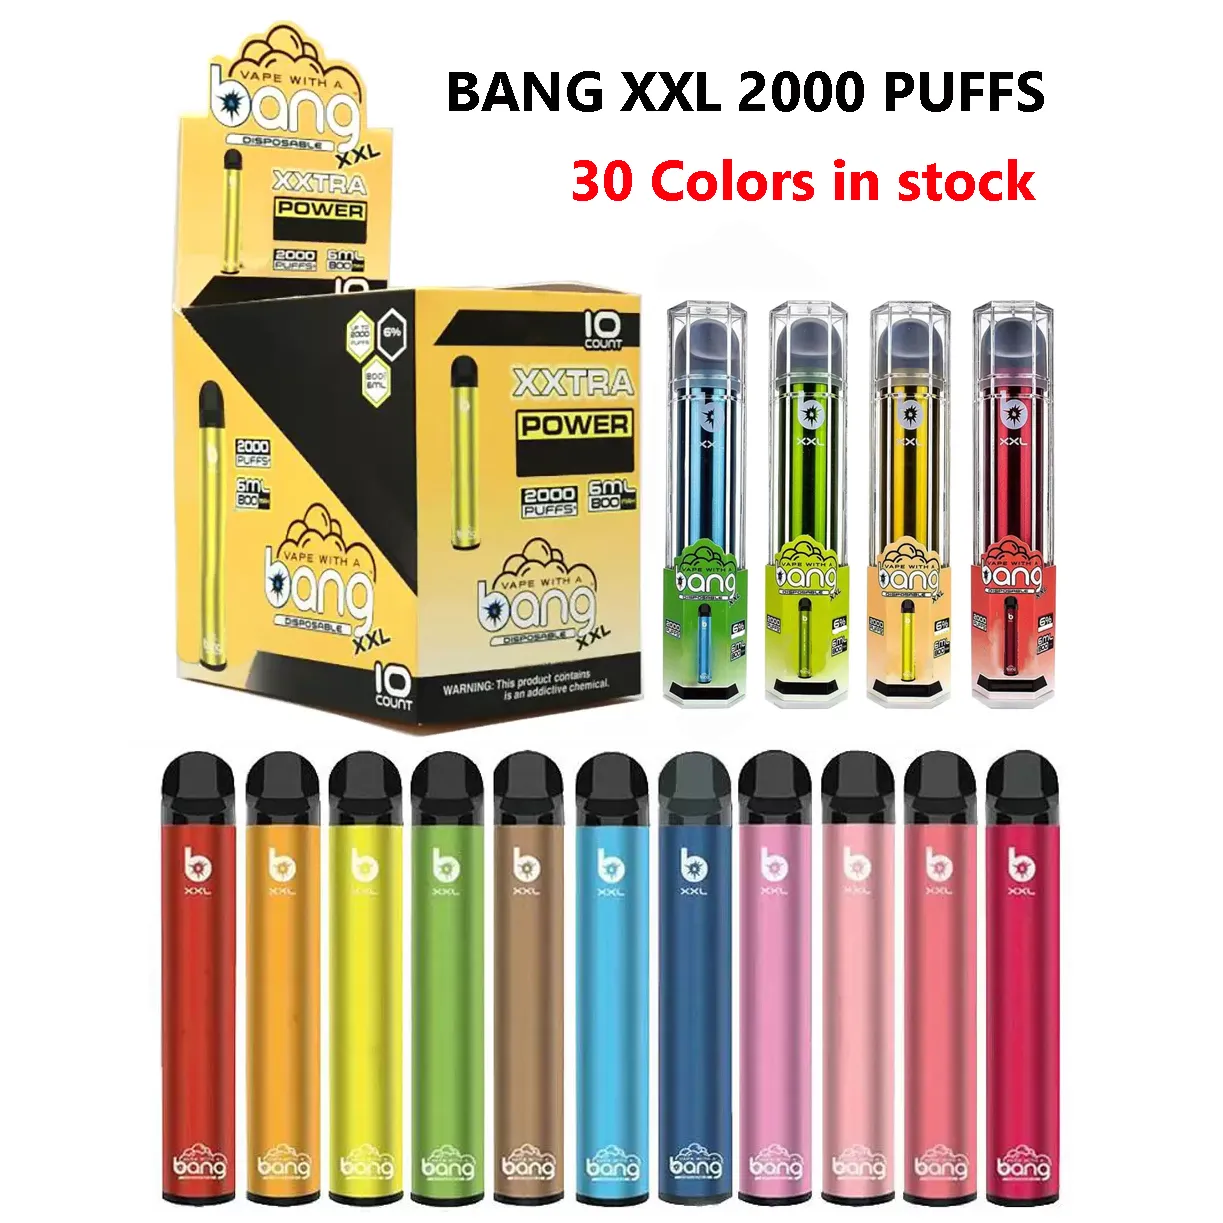 Bang XXL verfügbar EIGARETTES 2000 Puffs großer Vape -Stift -Gerät 2% 5% 6% Level Large Dampf Elektronische Cigs 30 Farben in Lagerbestand ohne Zollgebühr